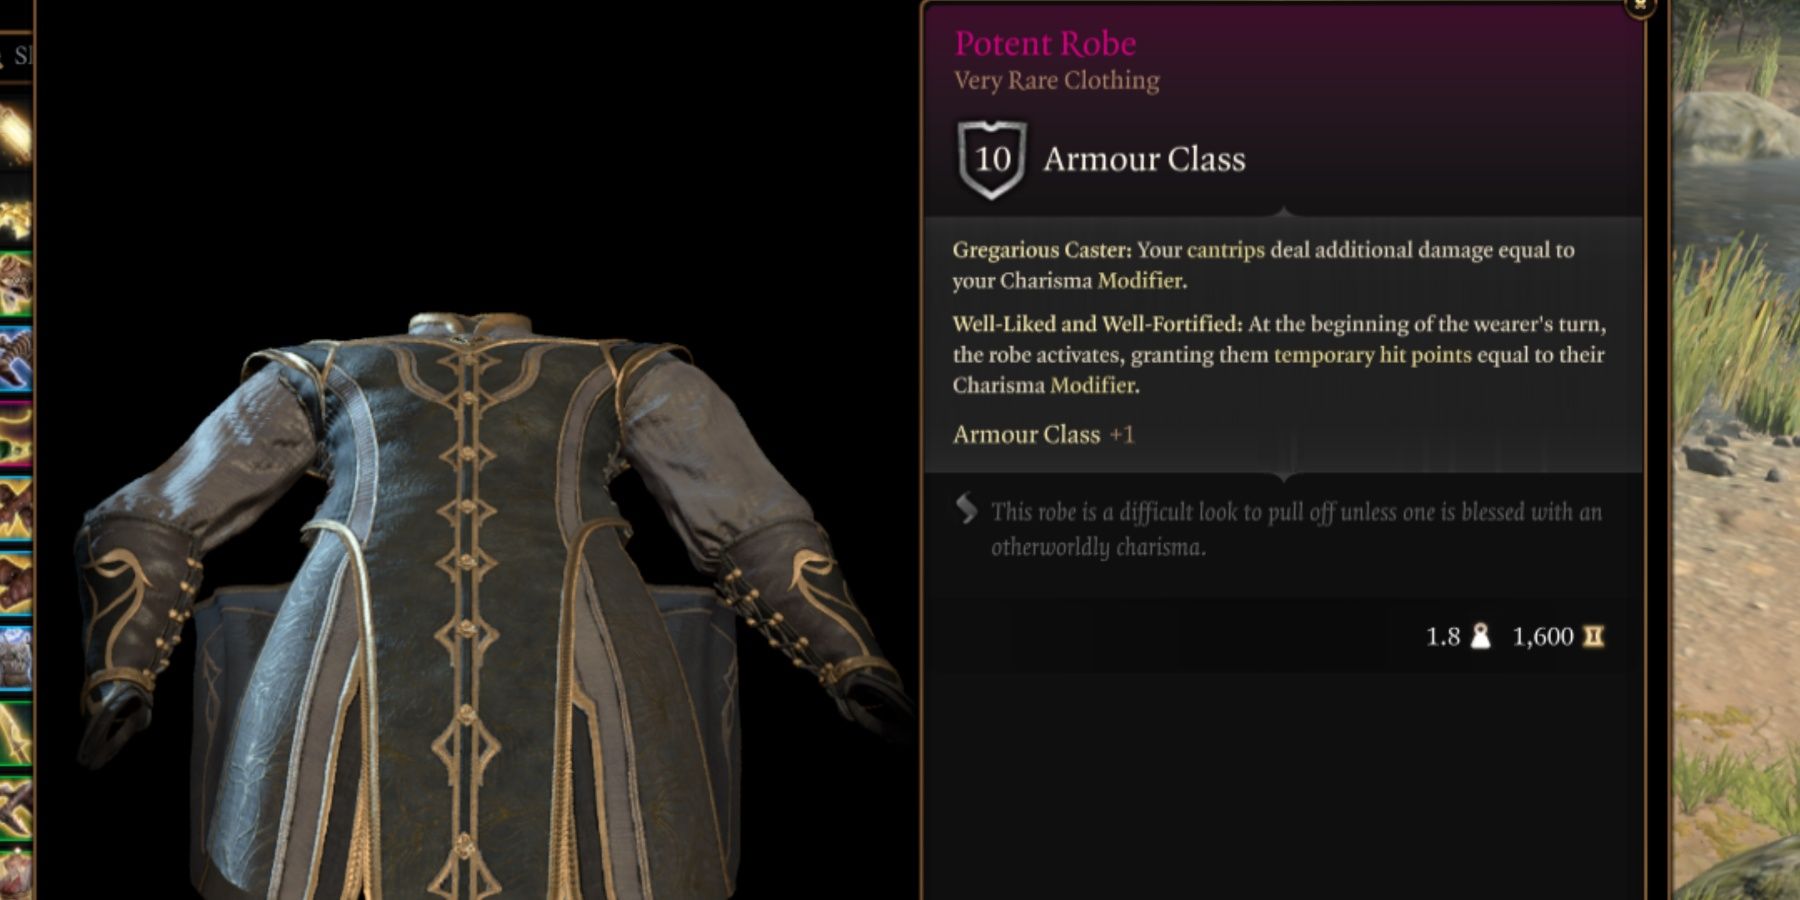 BG3 Potent Robe in-game item menu description